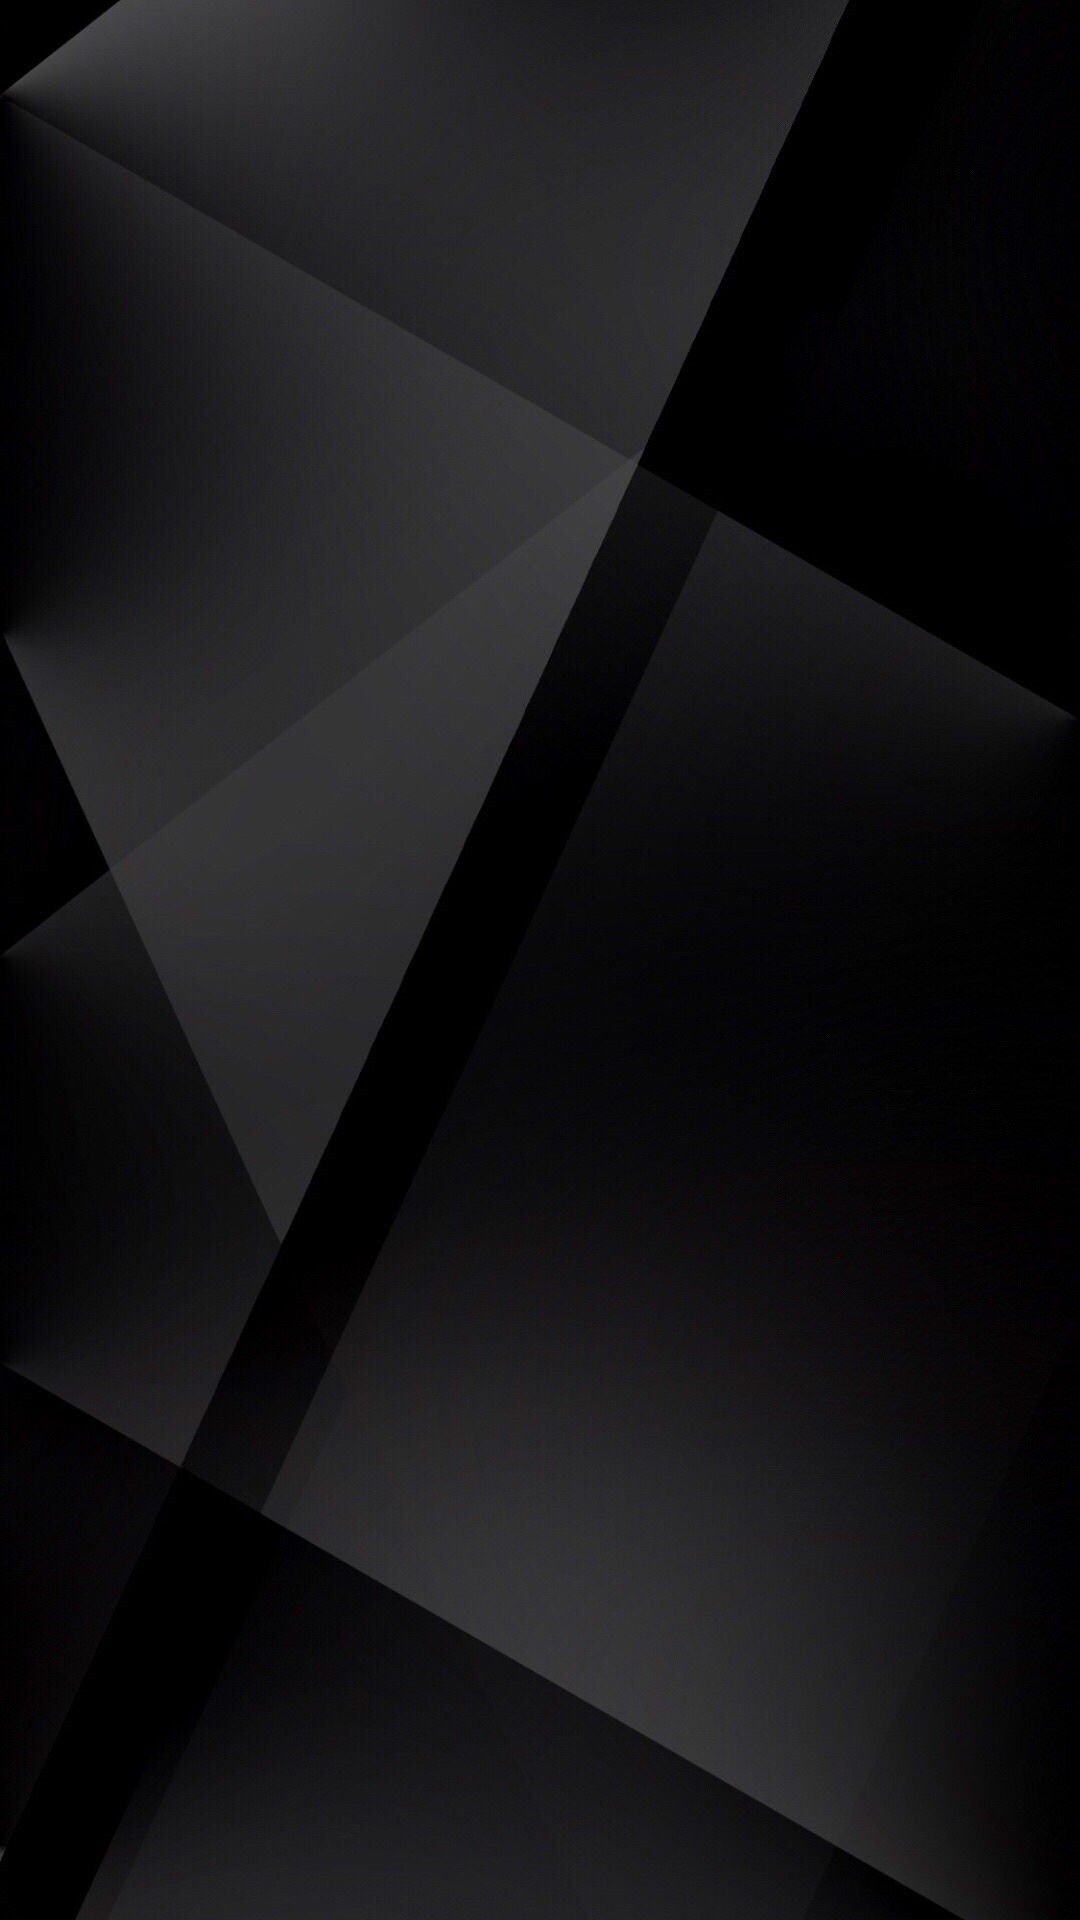 4K Dark For Iphone Wallpapers